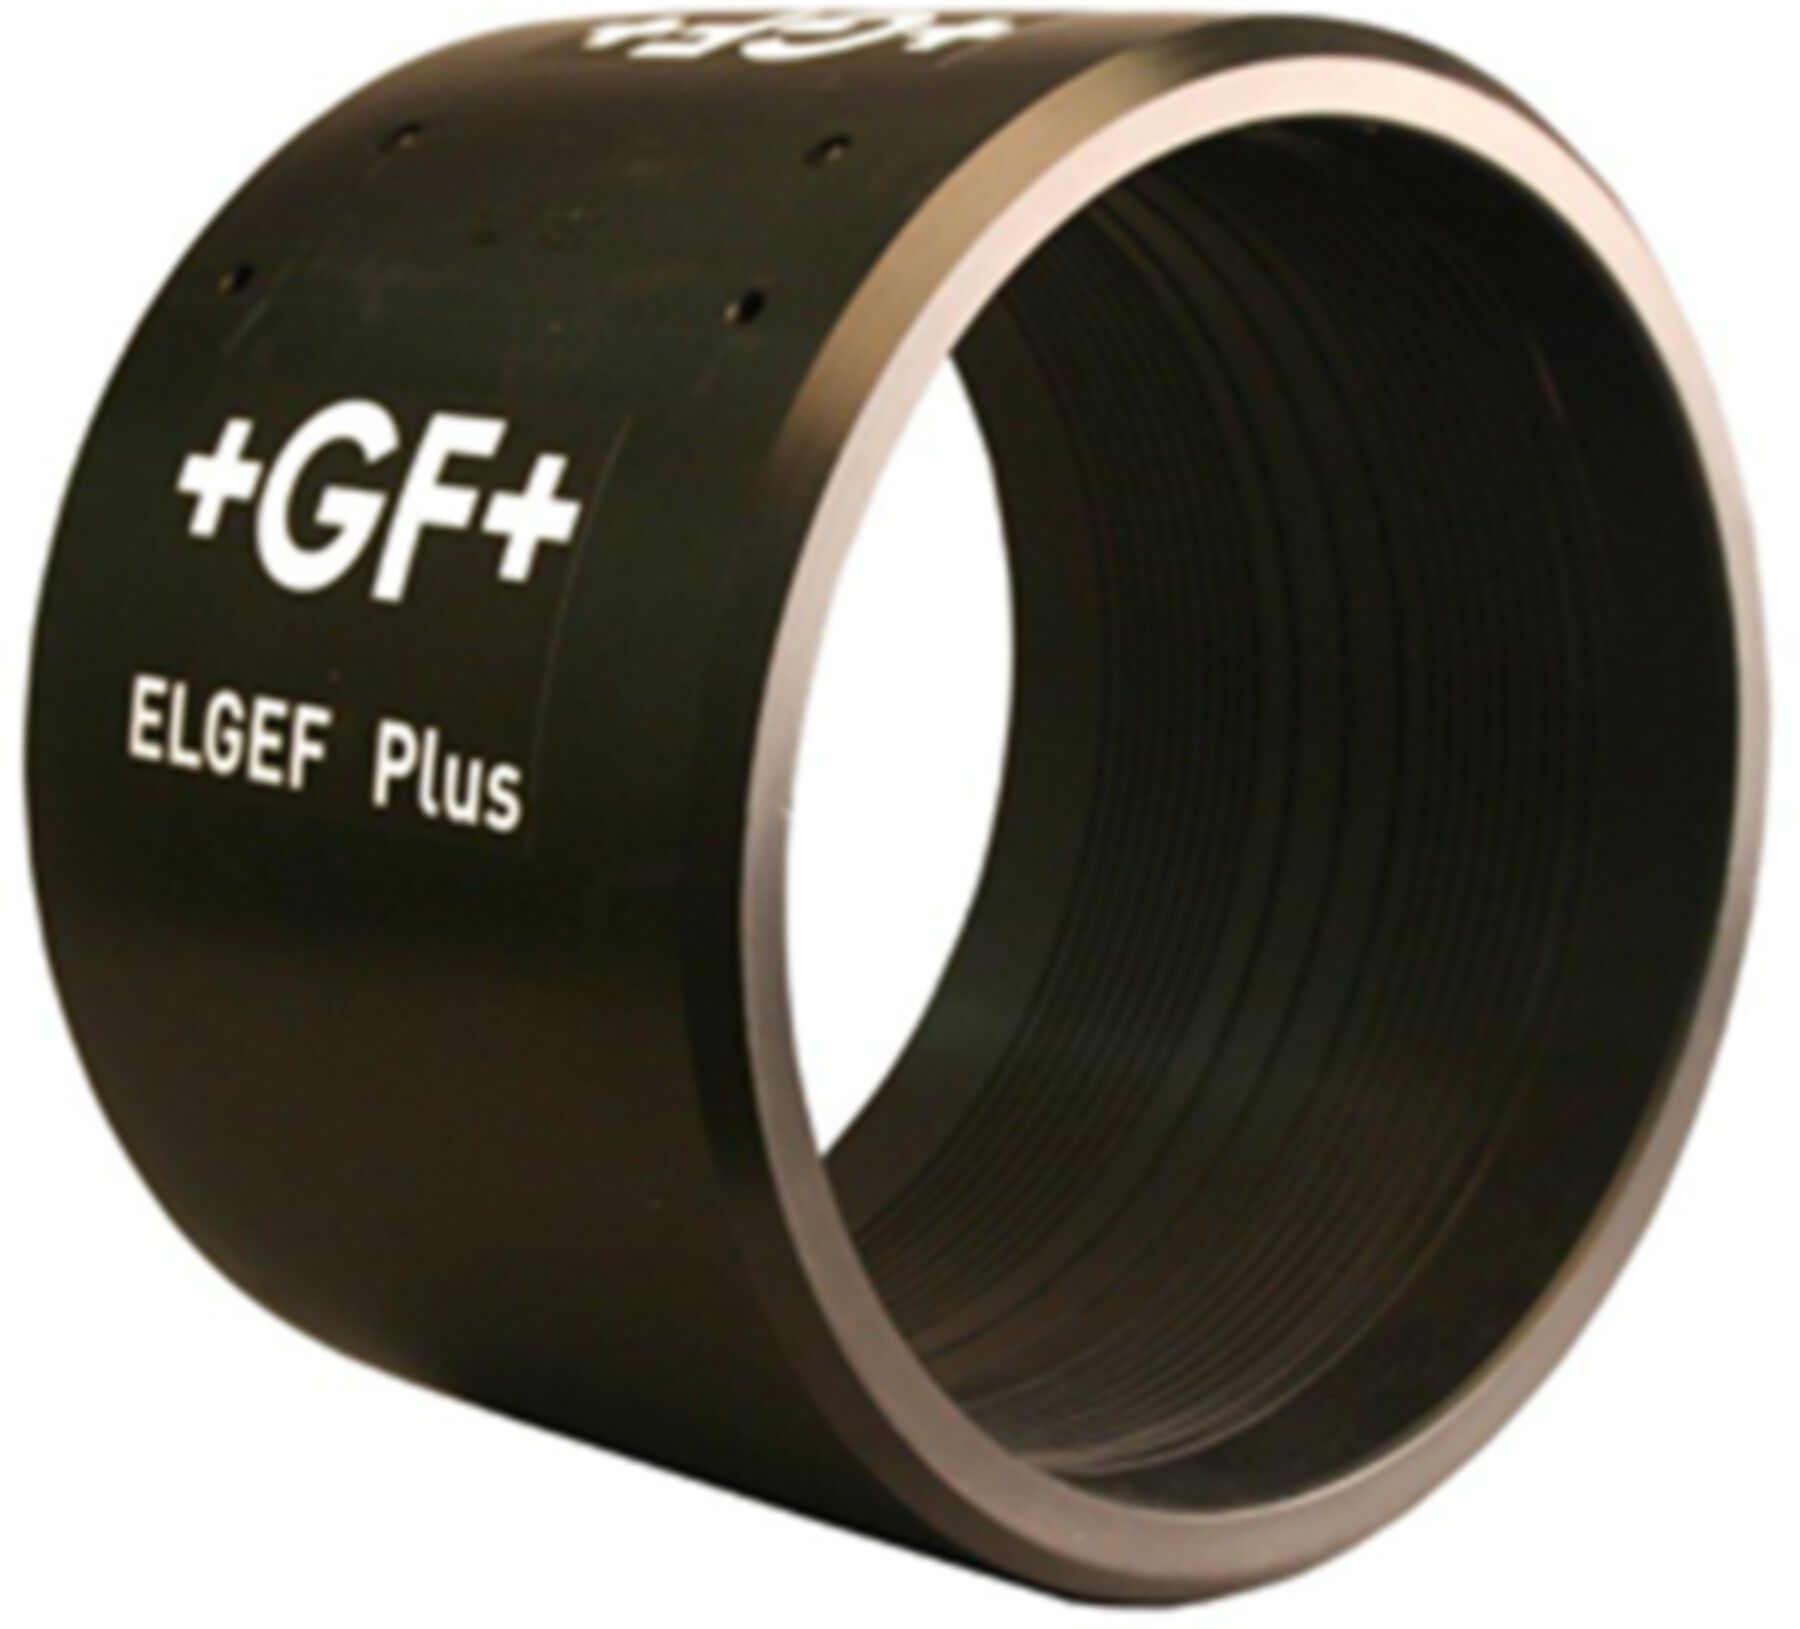 ELGEF Muffe PN 16 d 355mm 753 911 704 - ELGEF Plus Elektroschweissfittinge